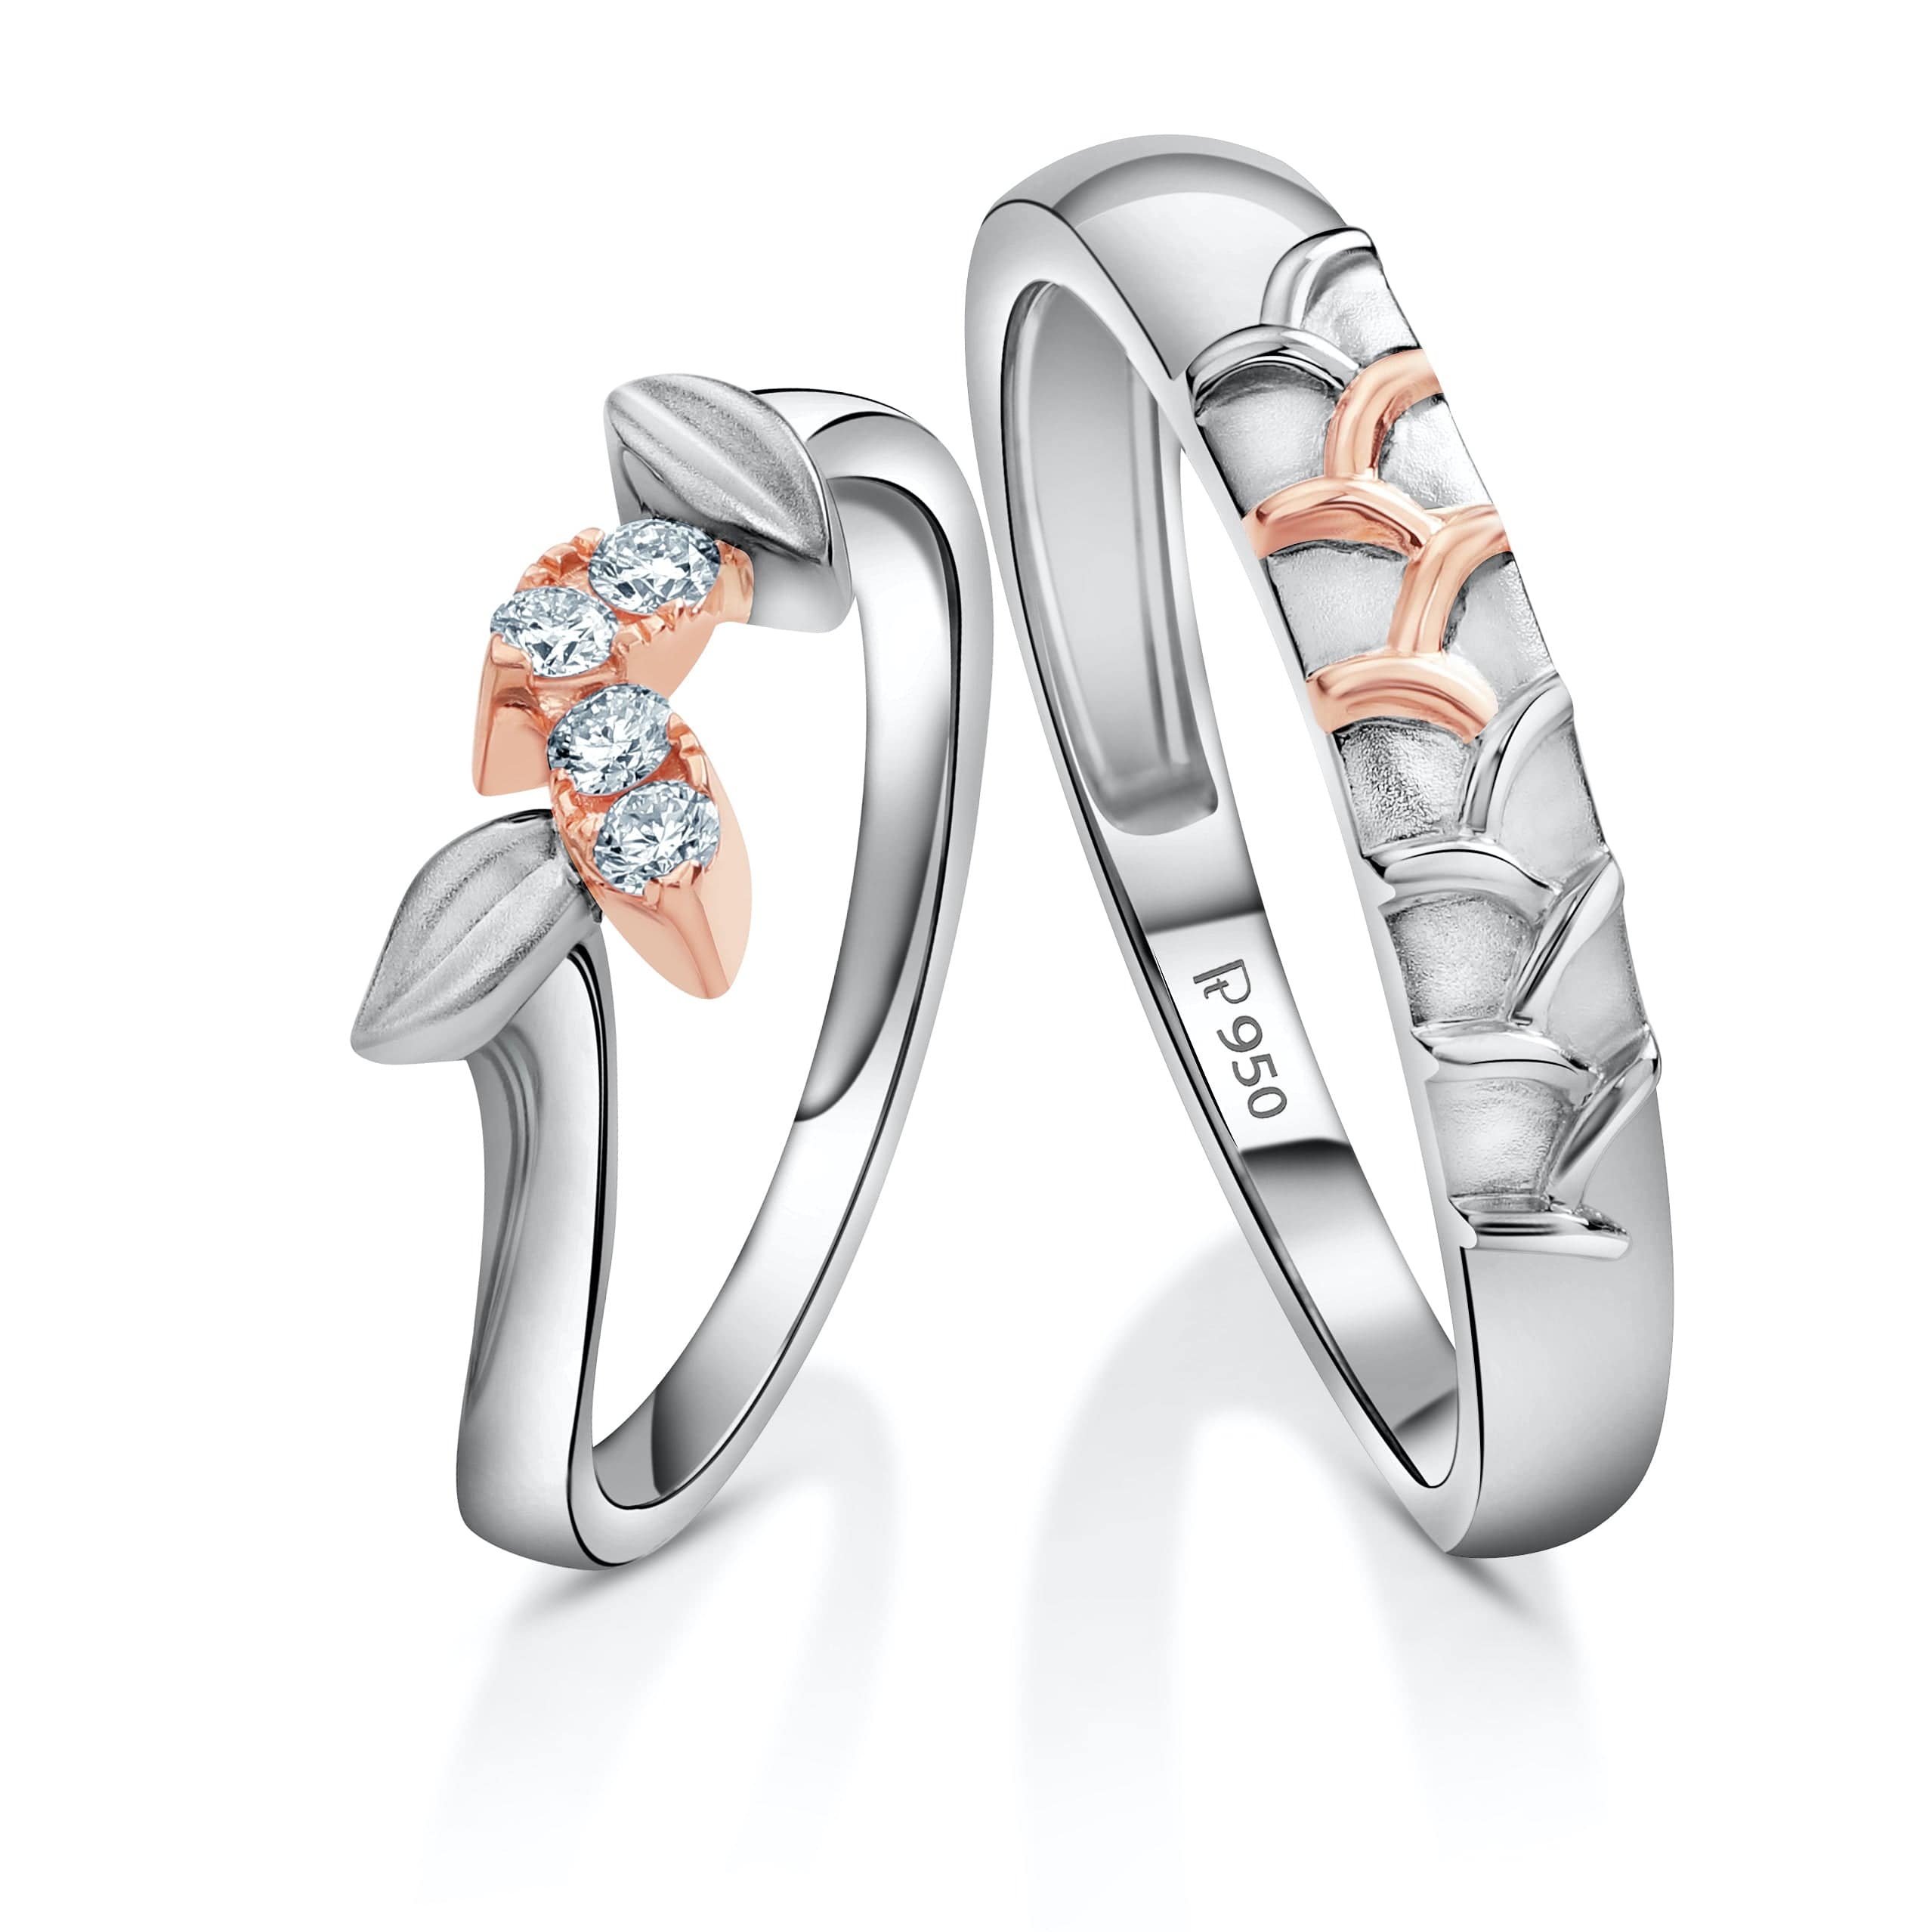 15 New Designs for Platinum Rings for Couples - Trending Models